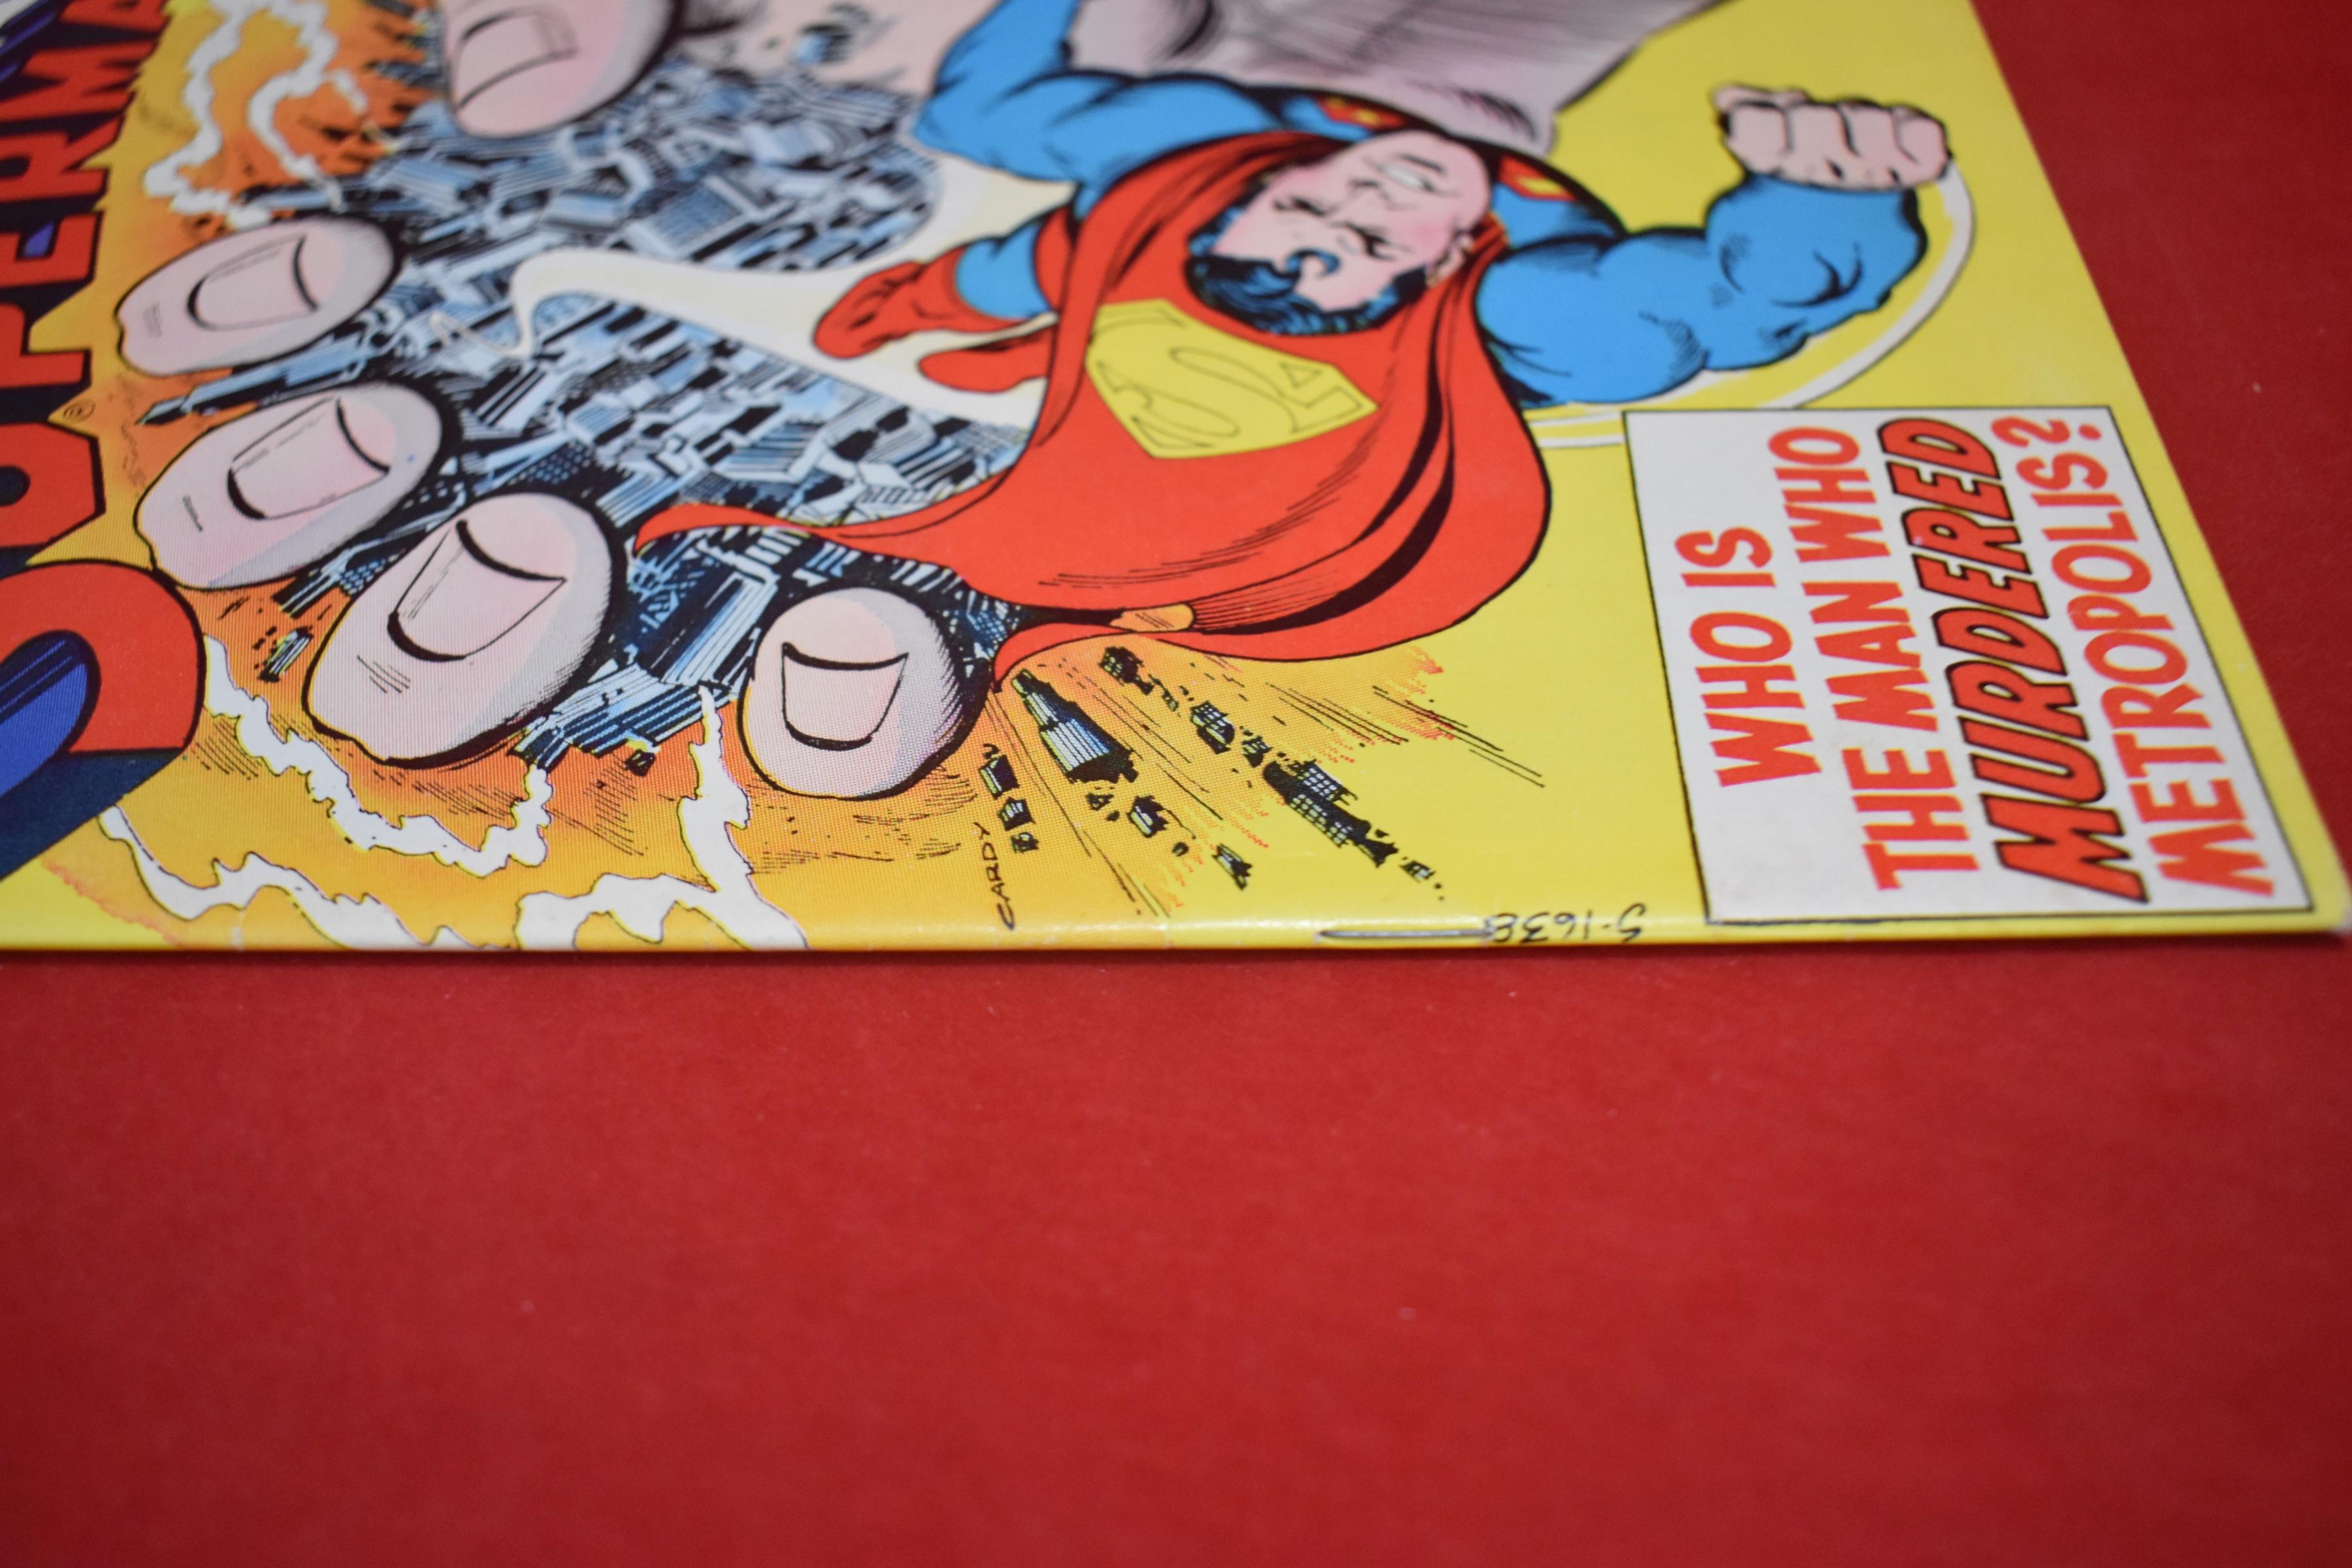 SUPERMAN #271 | THE MAN WHO MURDERED METROPOLIS! | NICK CARDY - 1974